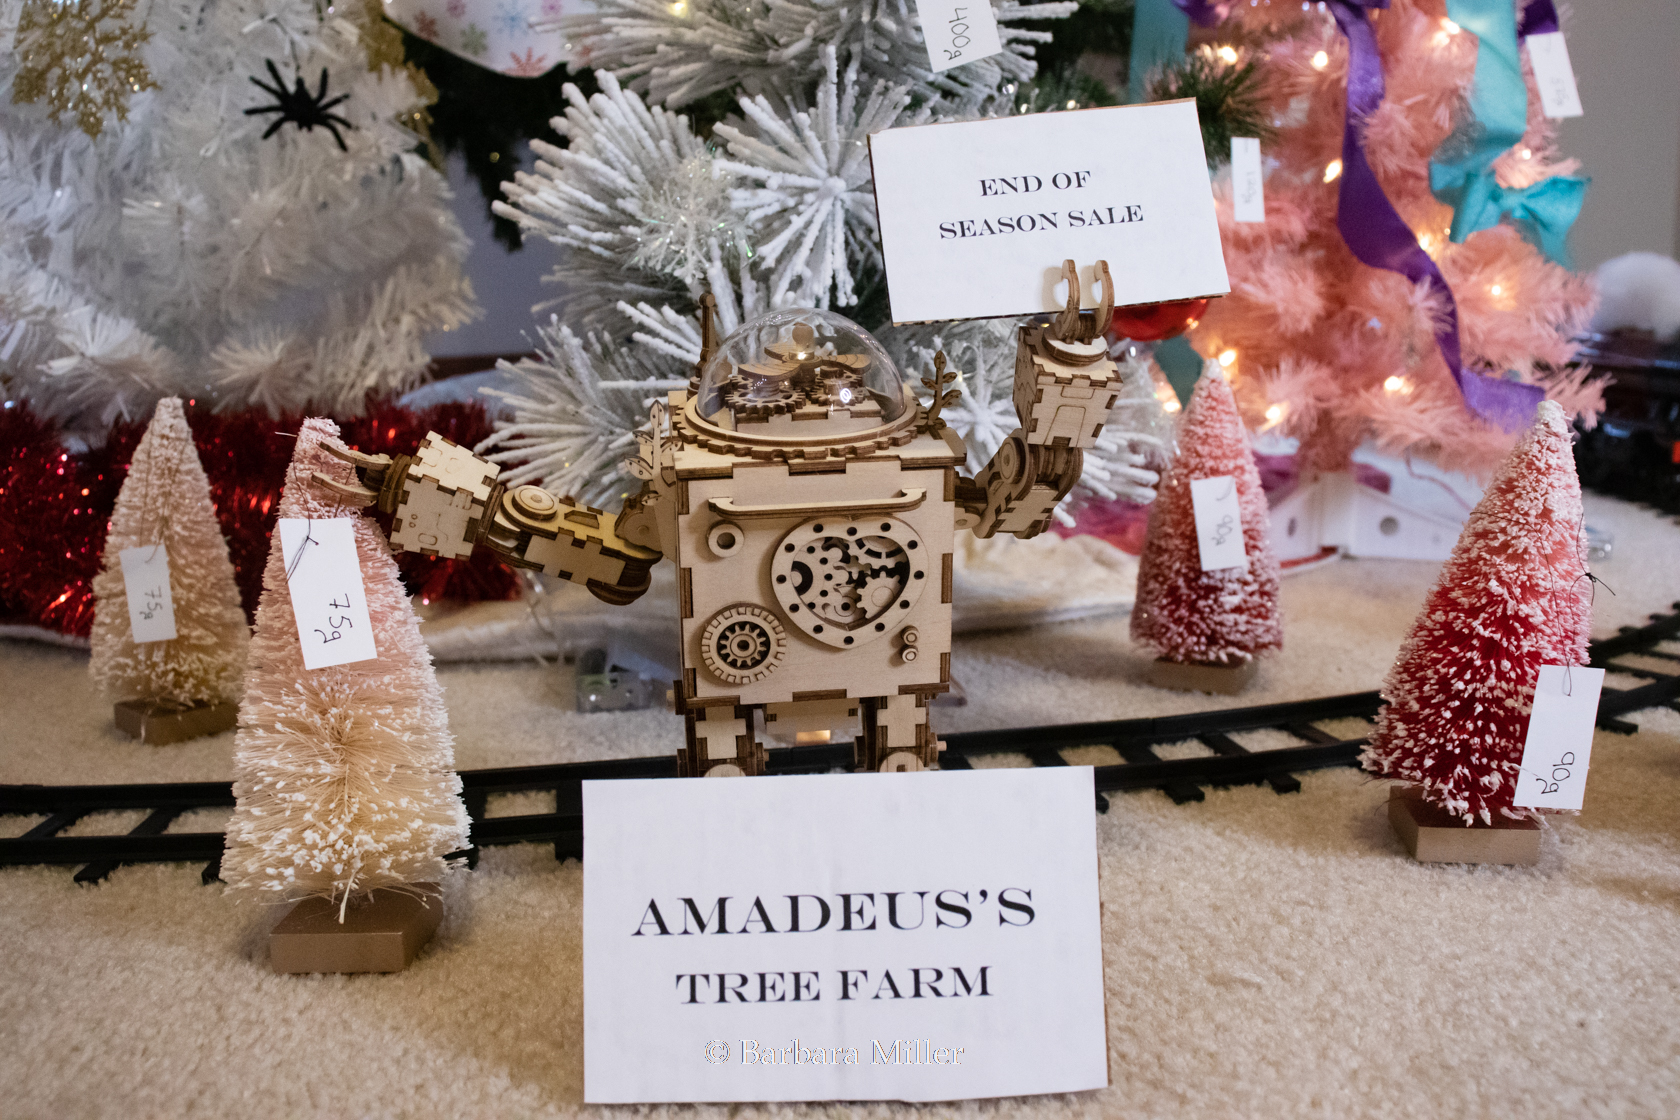 Amadeus’s Tree Farm: End of Season Sale